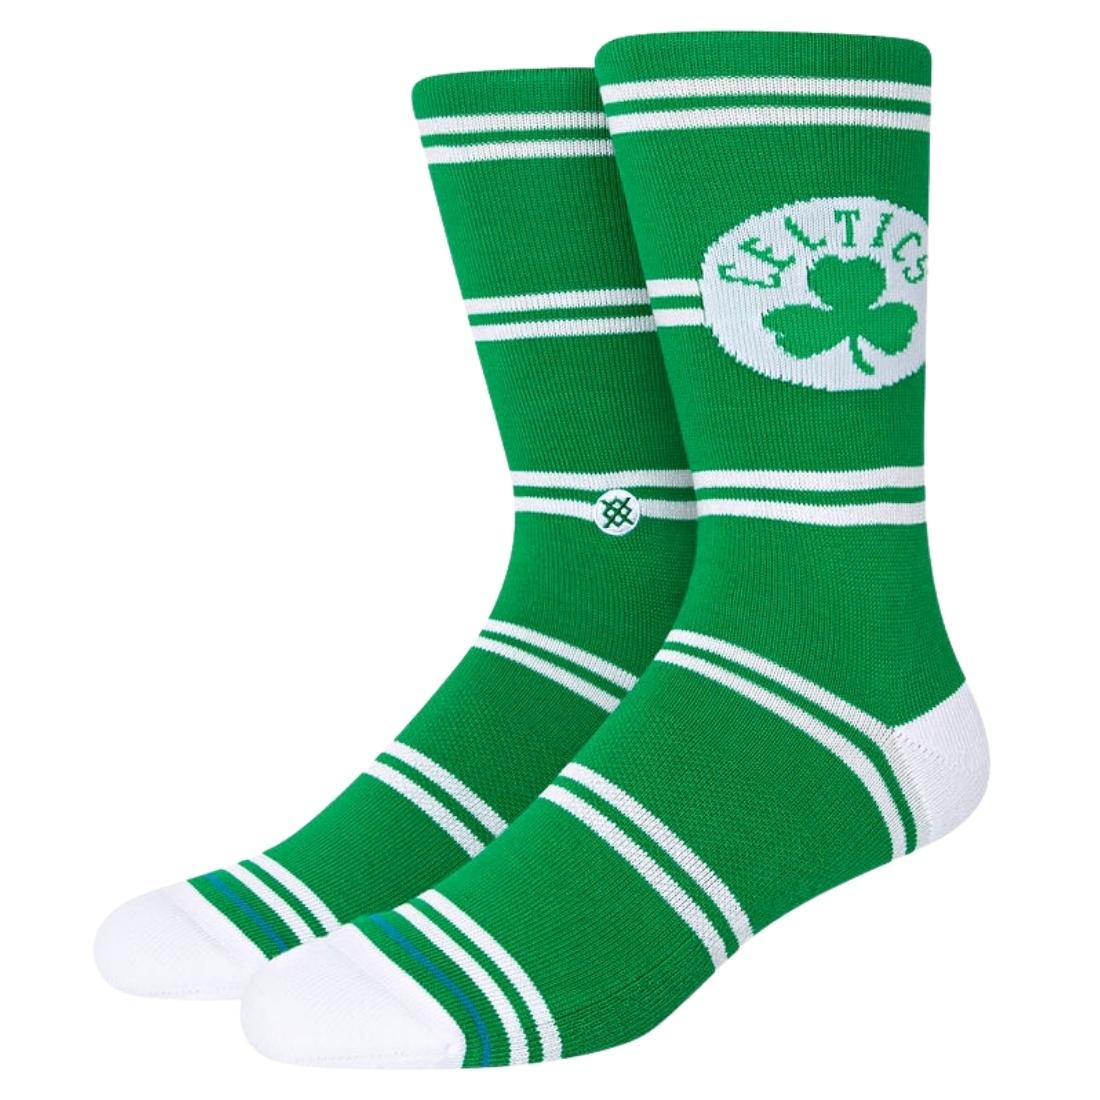 Stance Classics Celtics Socks - Green - Unisex Crew Length Socks by Stance L (UK8-12.5)